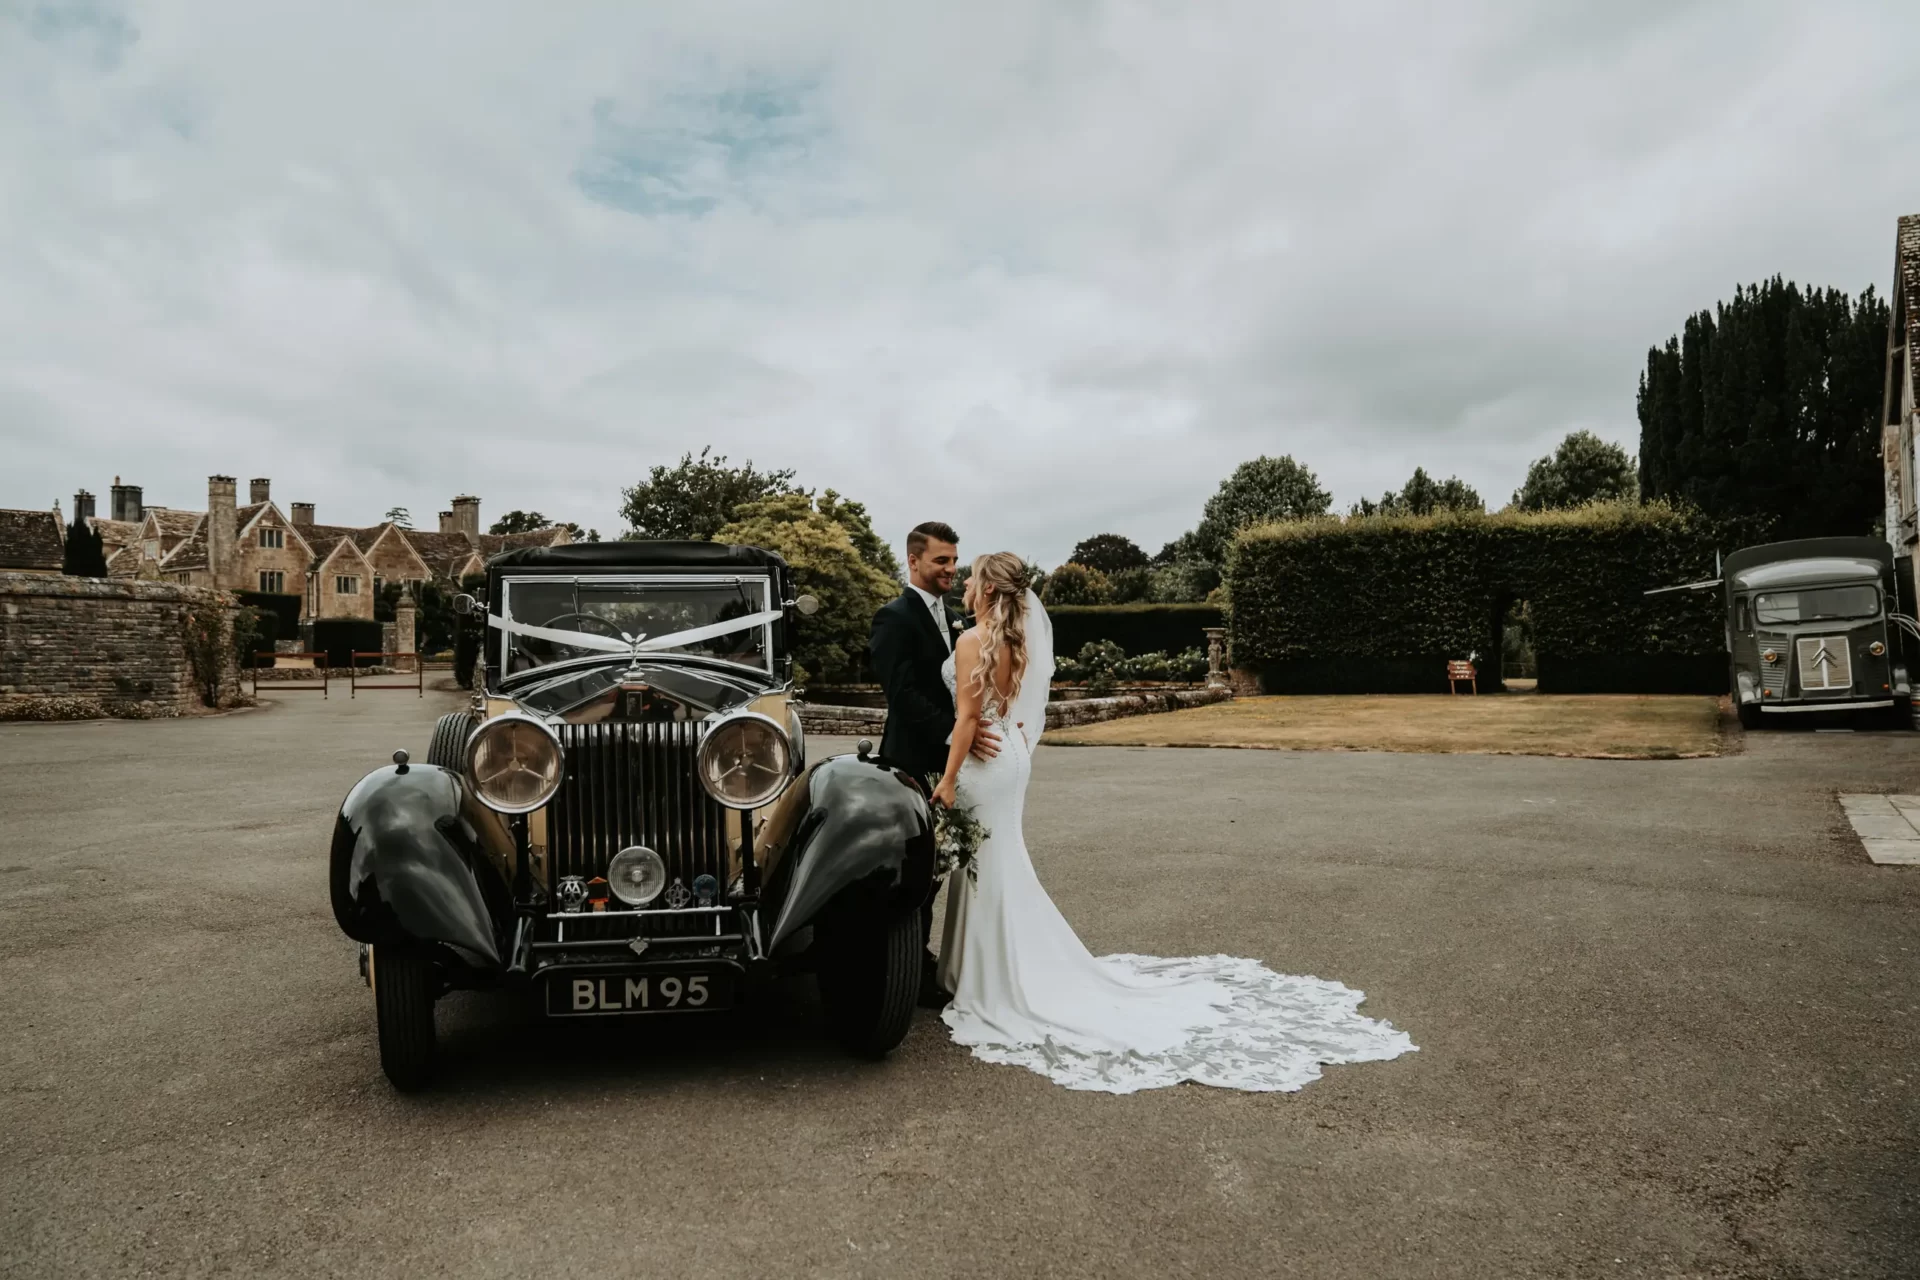 Jess & Tom's Quintessentially British Wedding with Rustic Charm